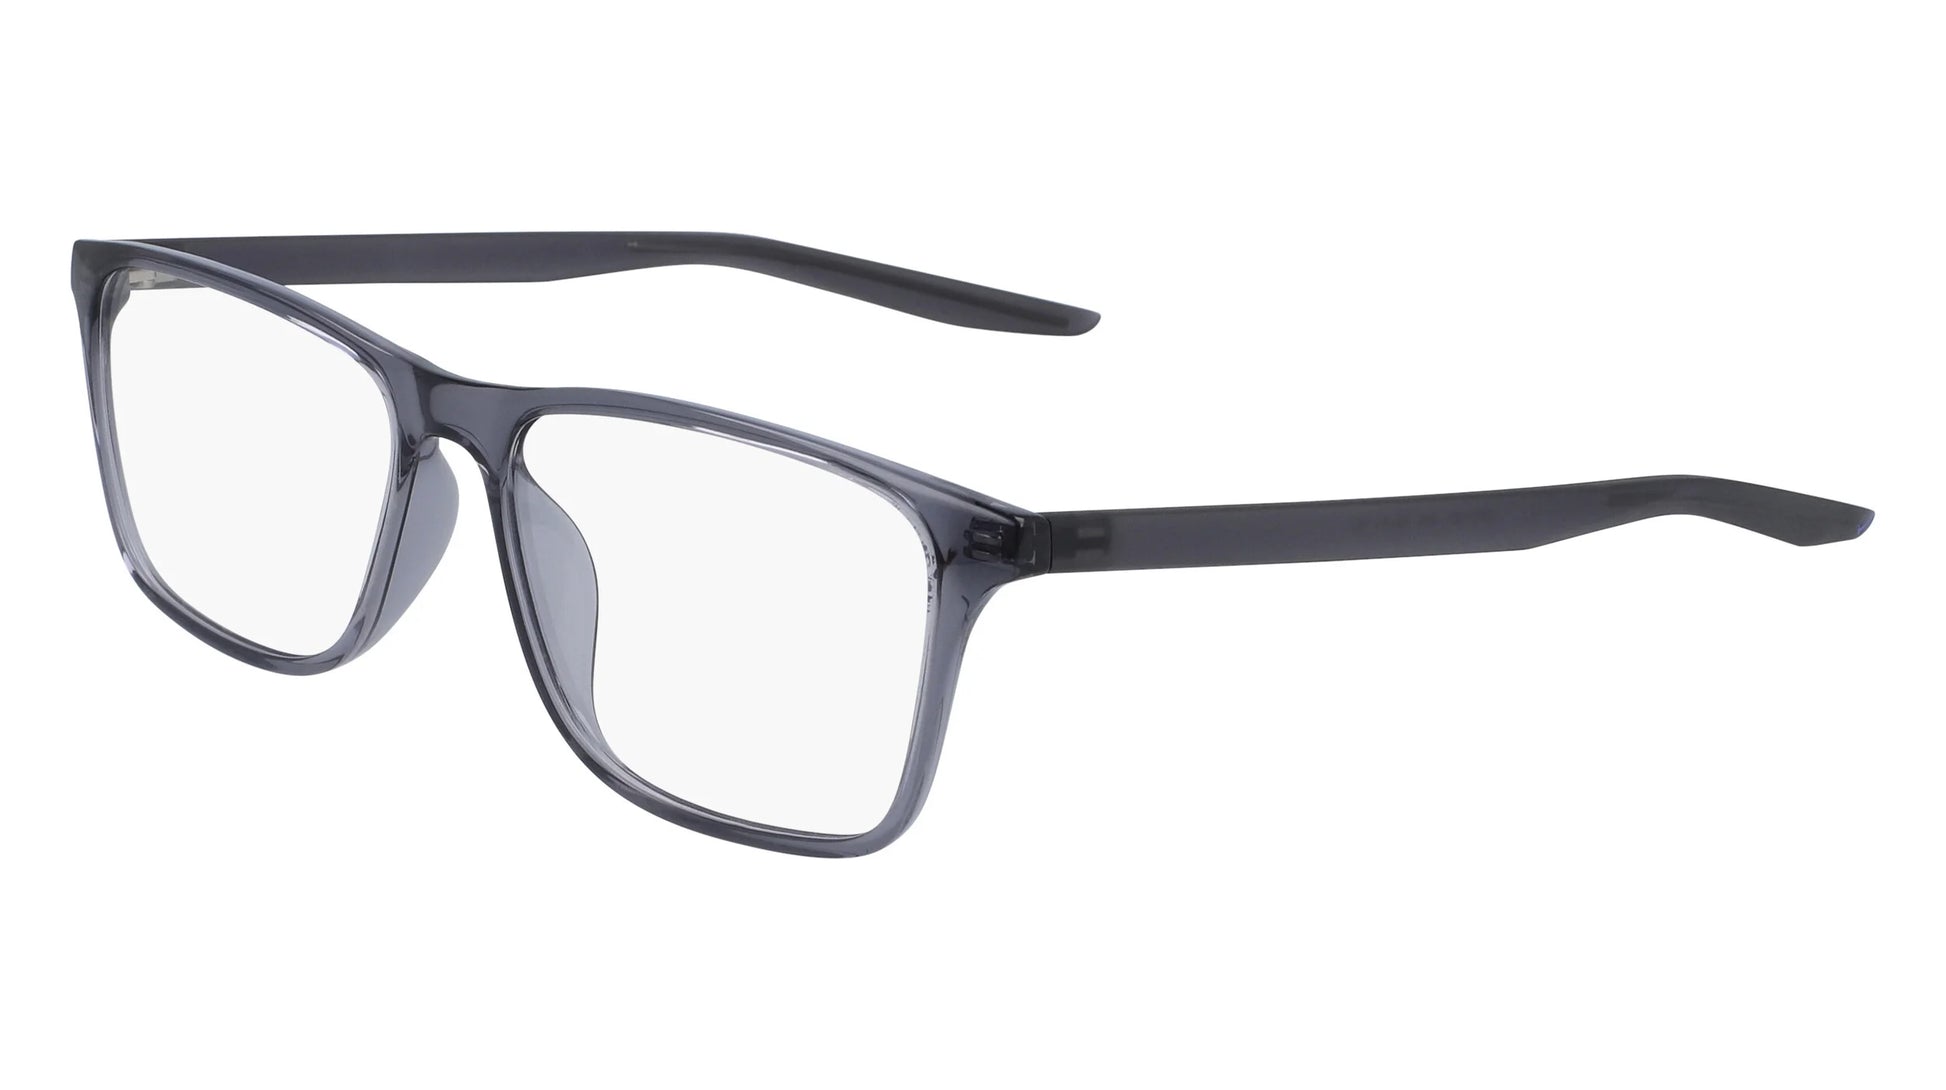 Nike 7125 Eyeglasses Gridiron